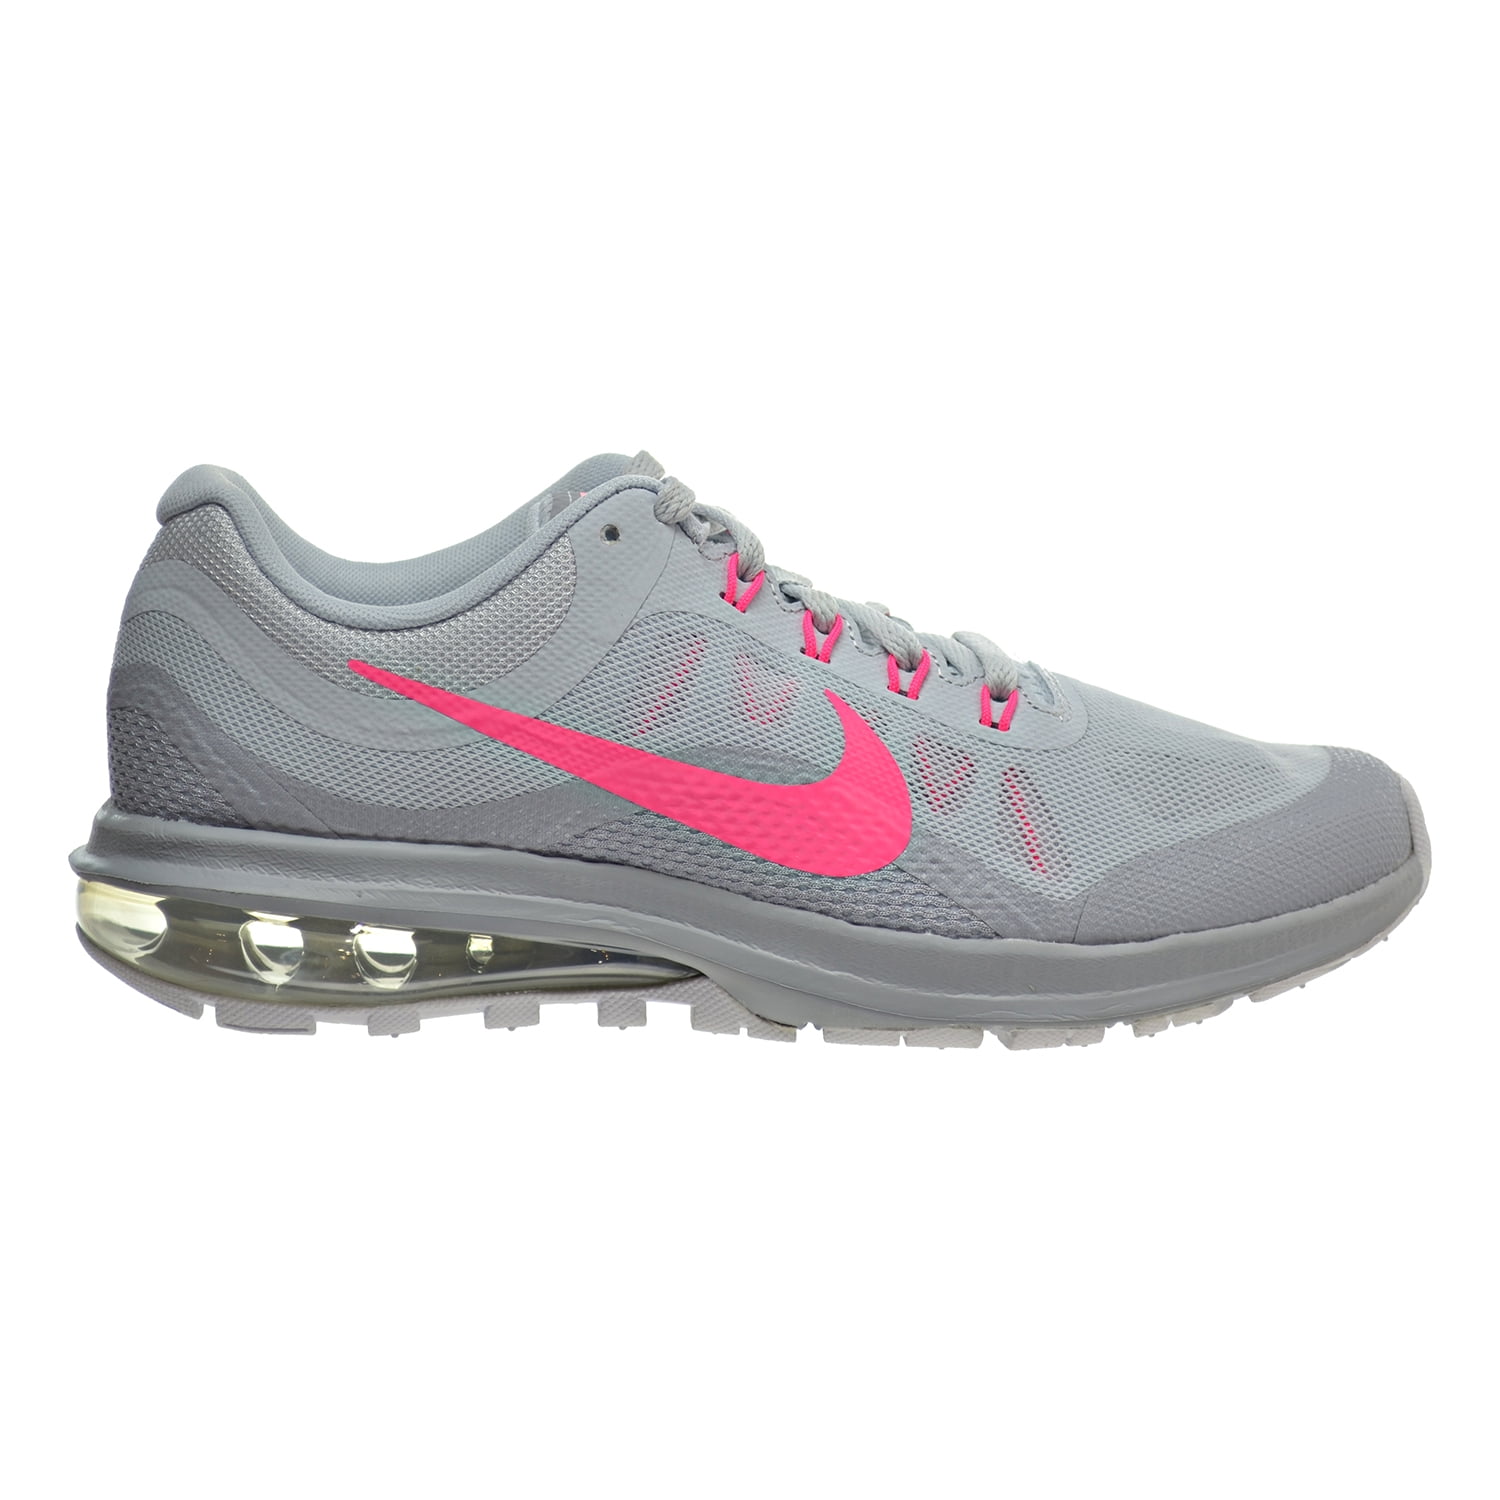 Nike Air Max Dynasty 2 (GS) Shoes Pure Platinum/Hyper Pink 859577-001 - Walmart.com